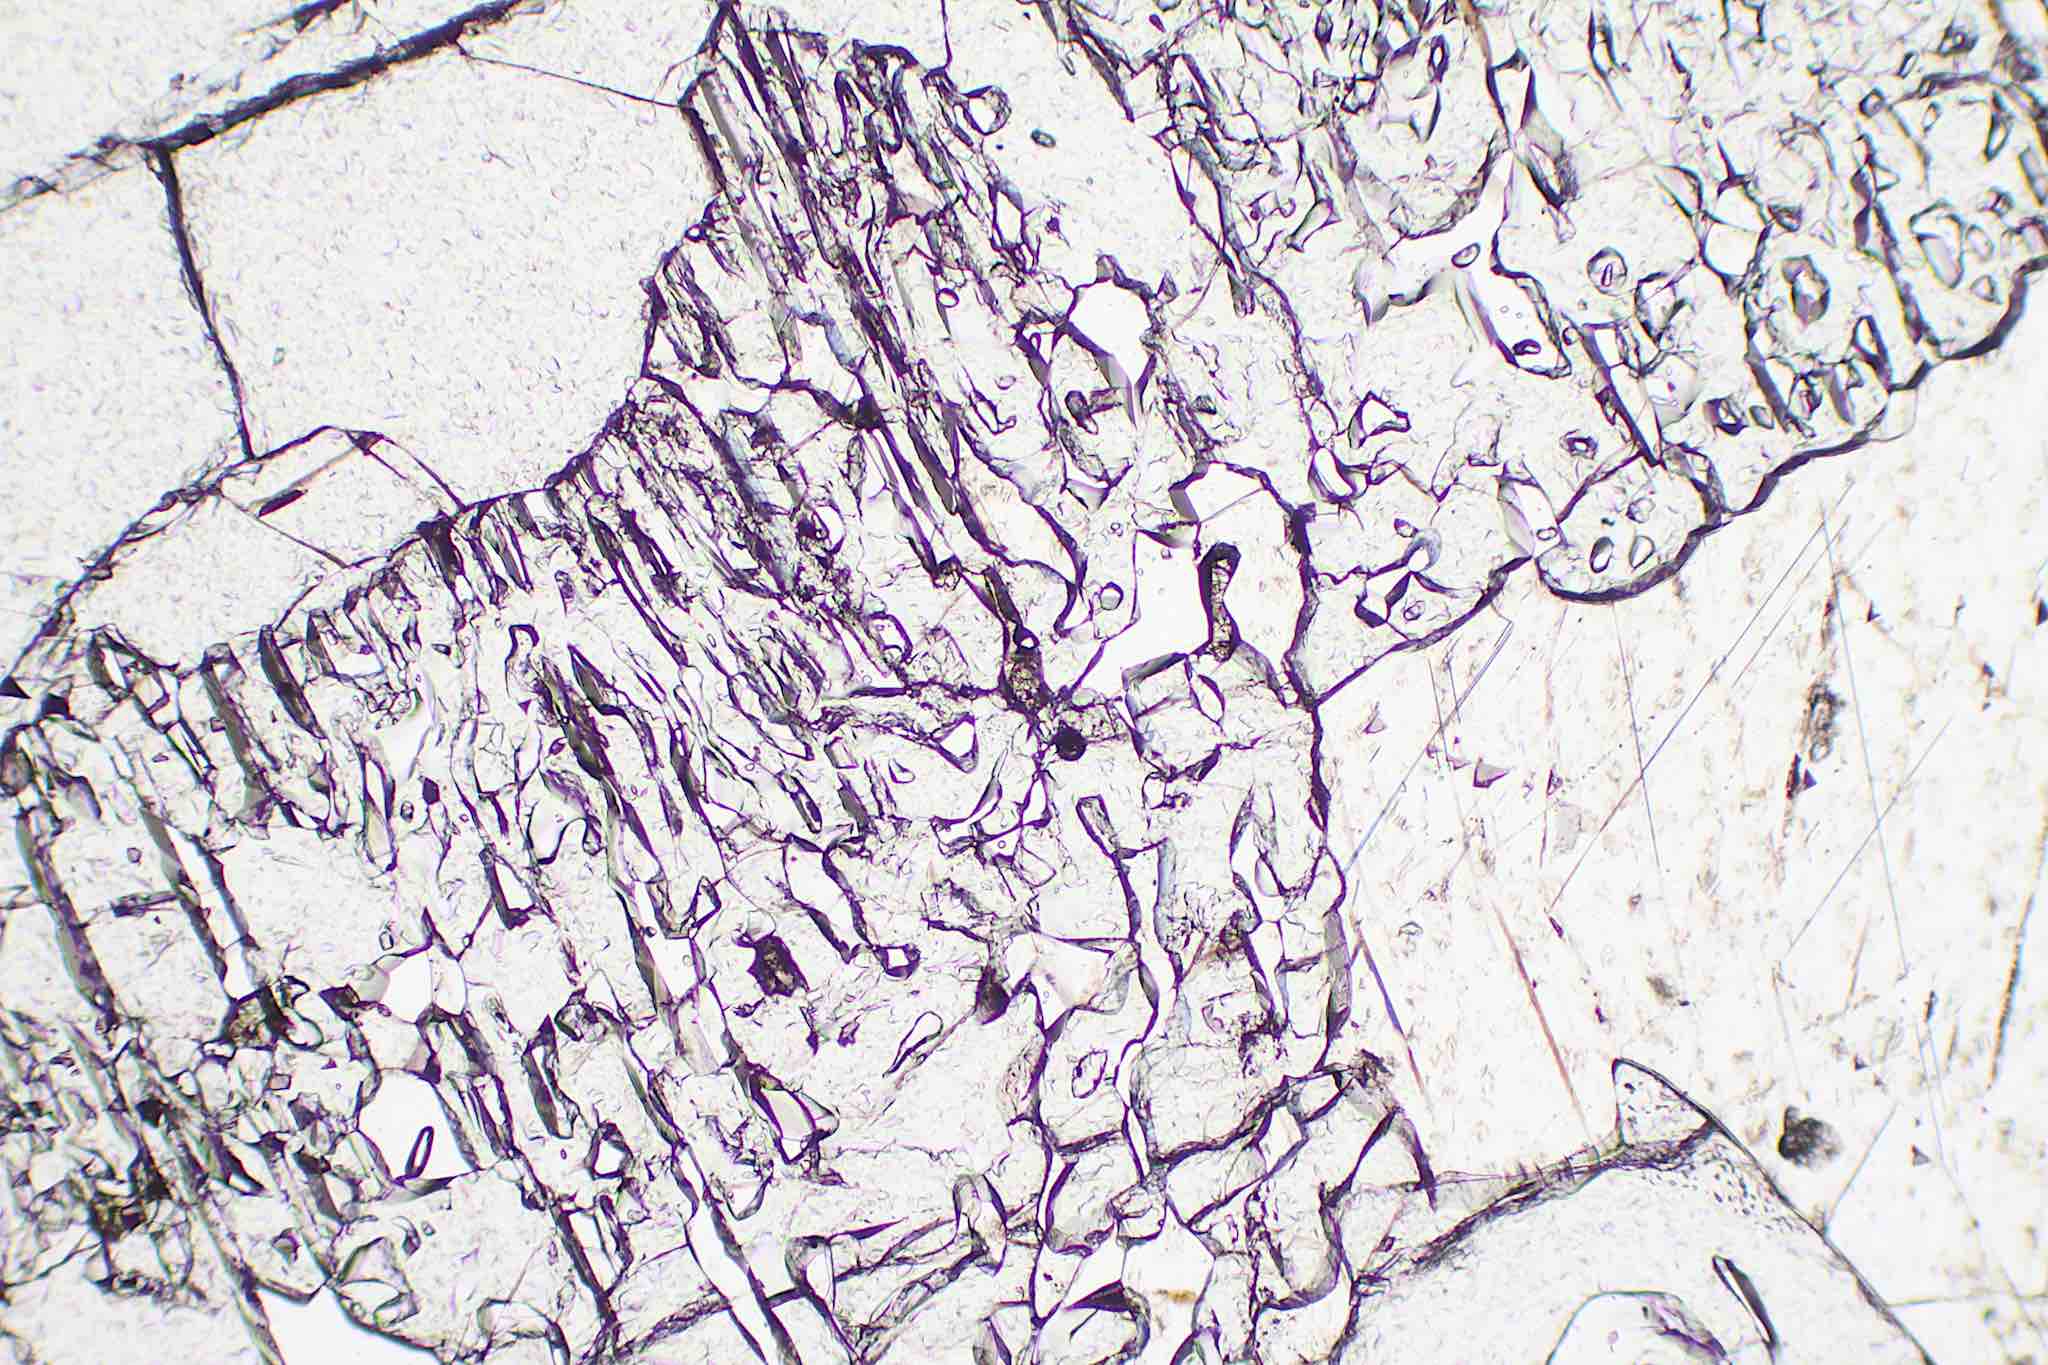 tsavorite and tanzanite in thin section Merelani Tanzania